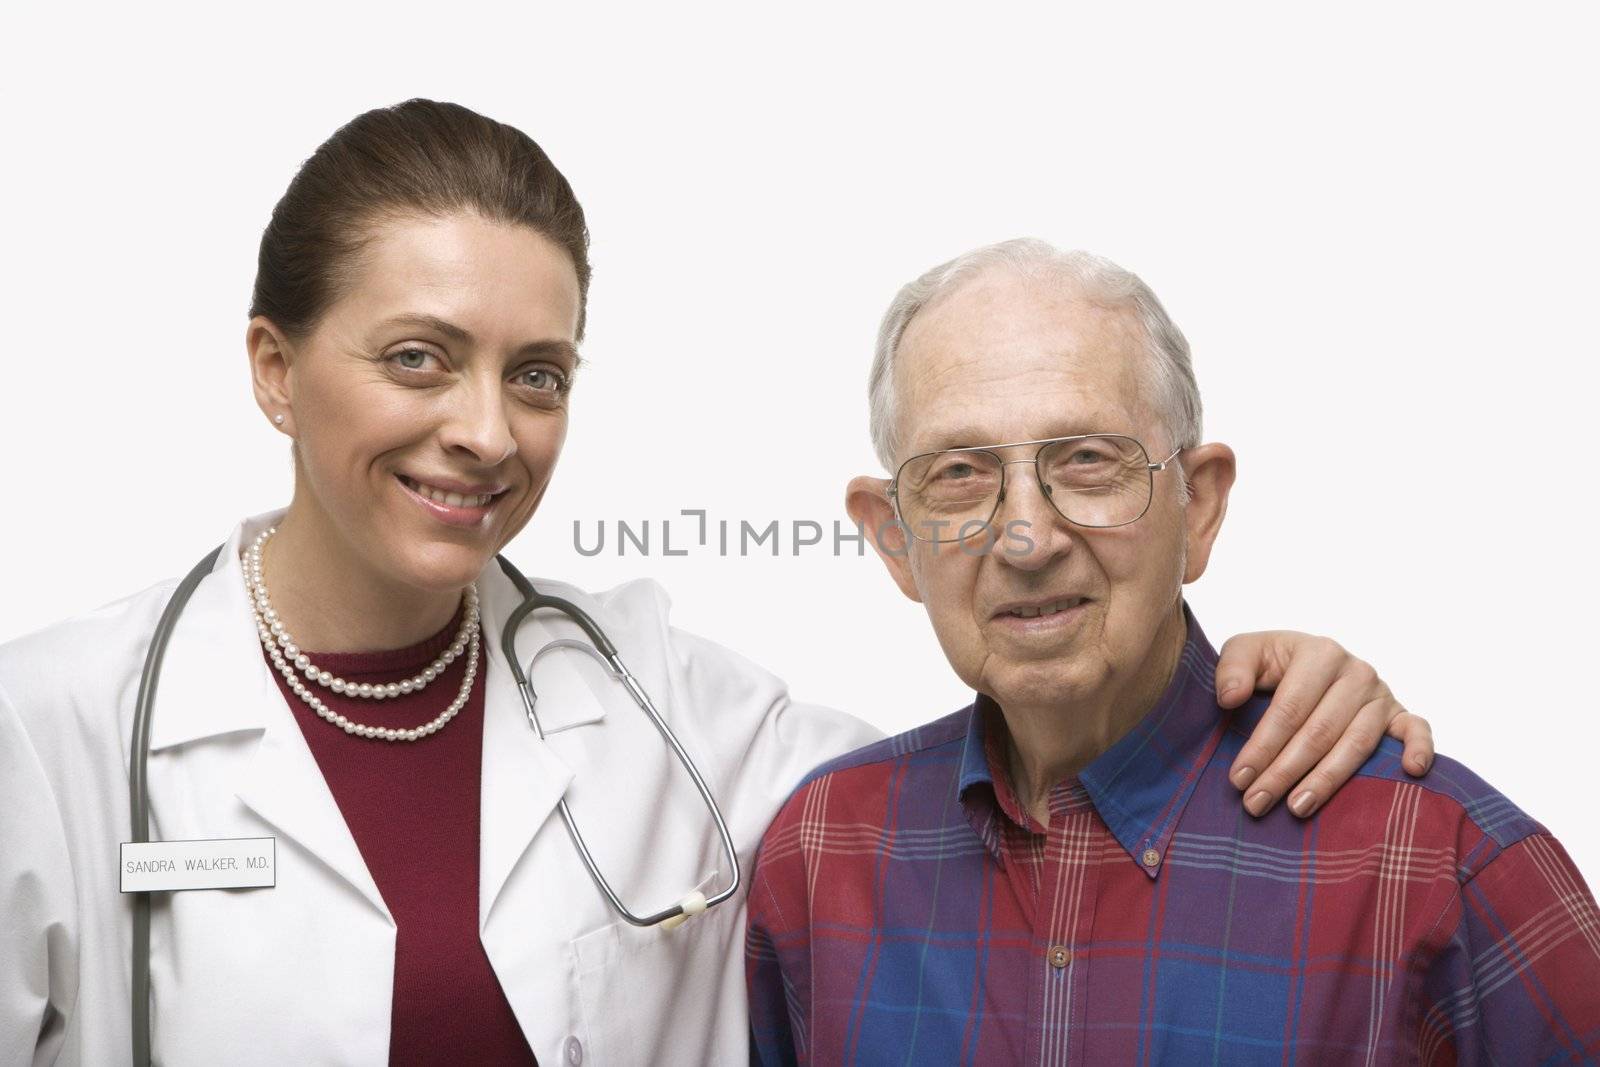 Mid-adult Caucasian female doctor with arm around elderly Caucasian male.